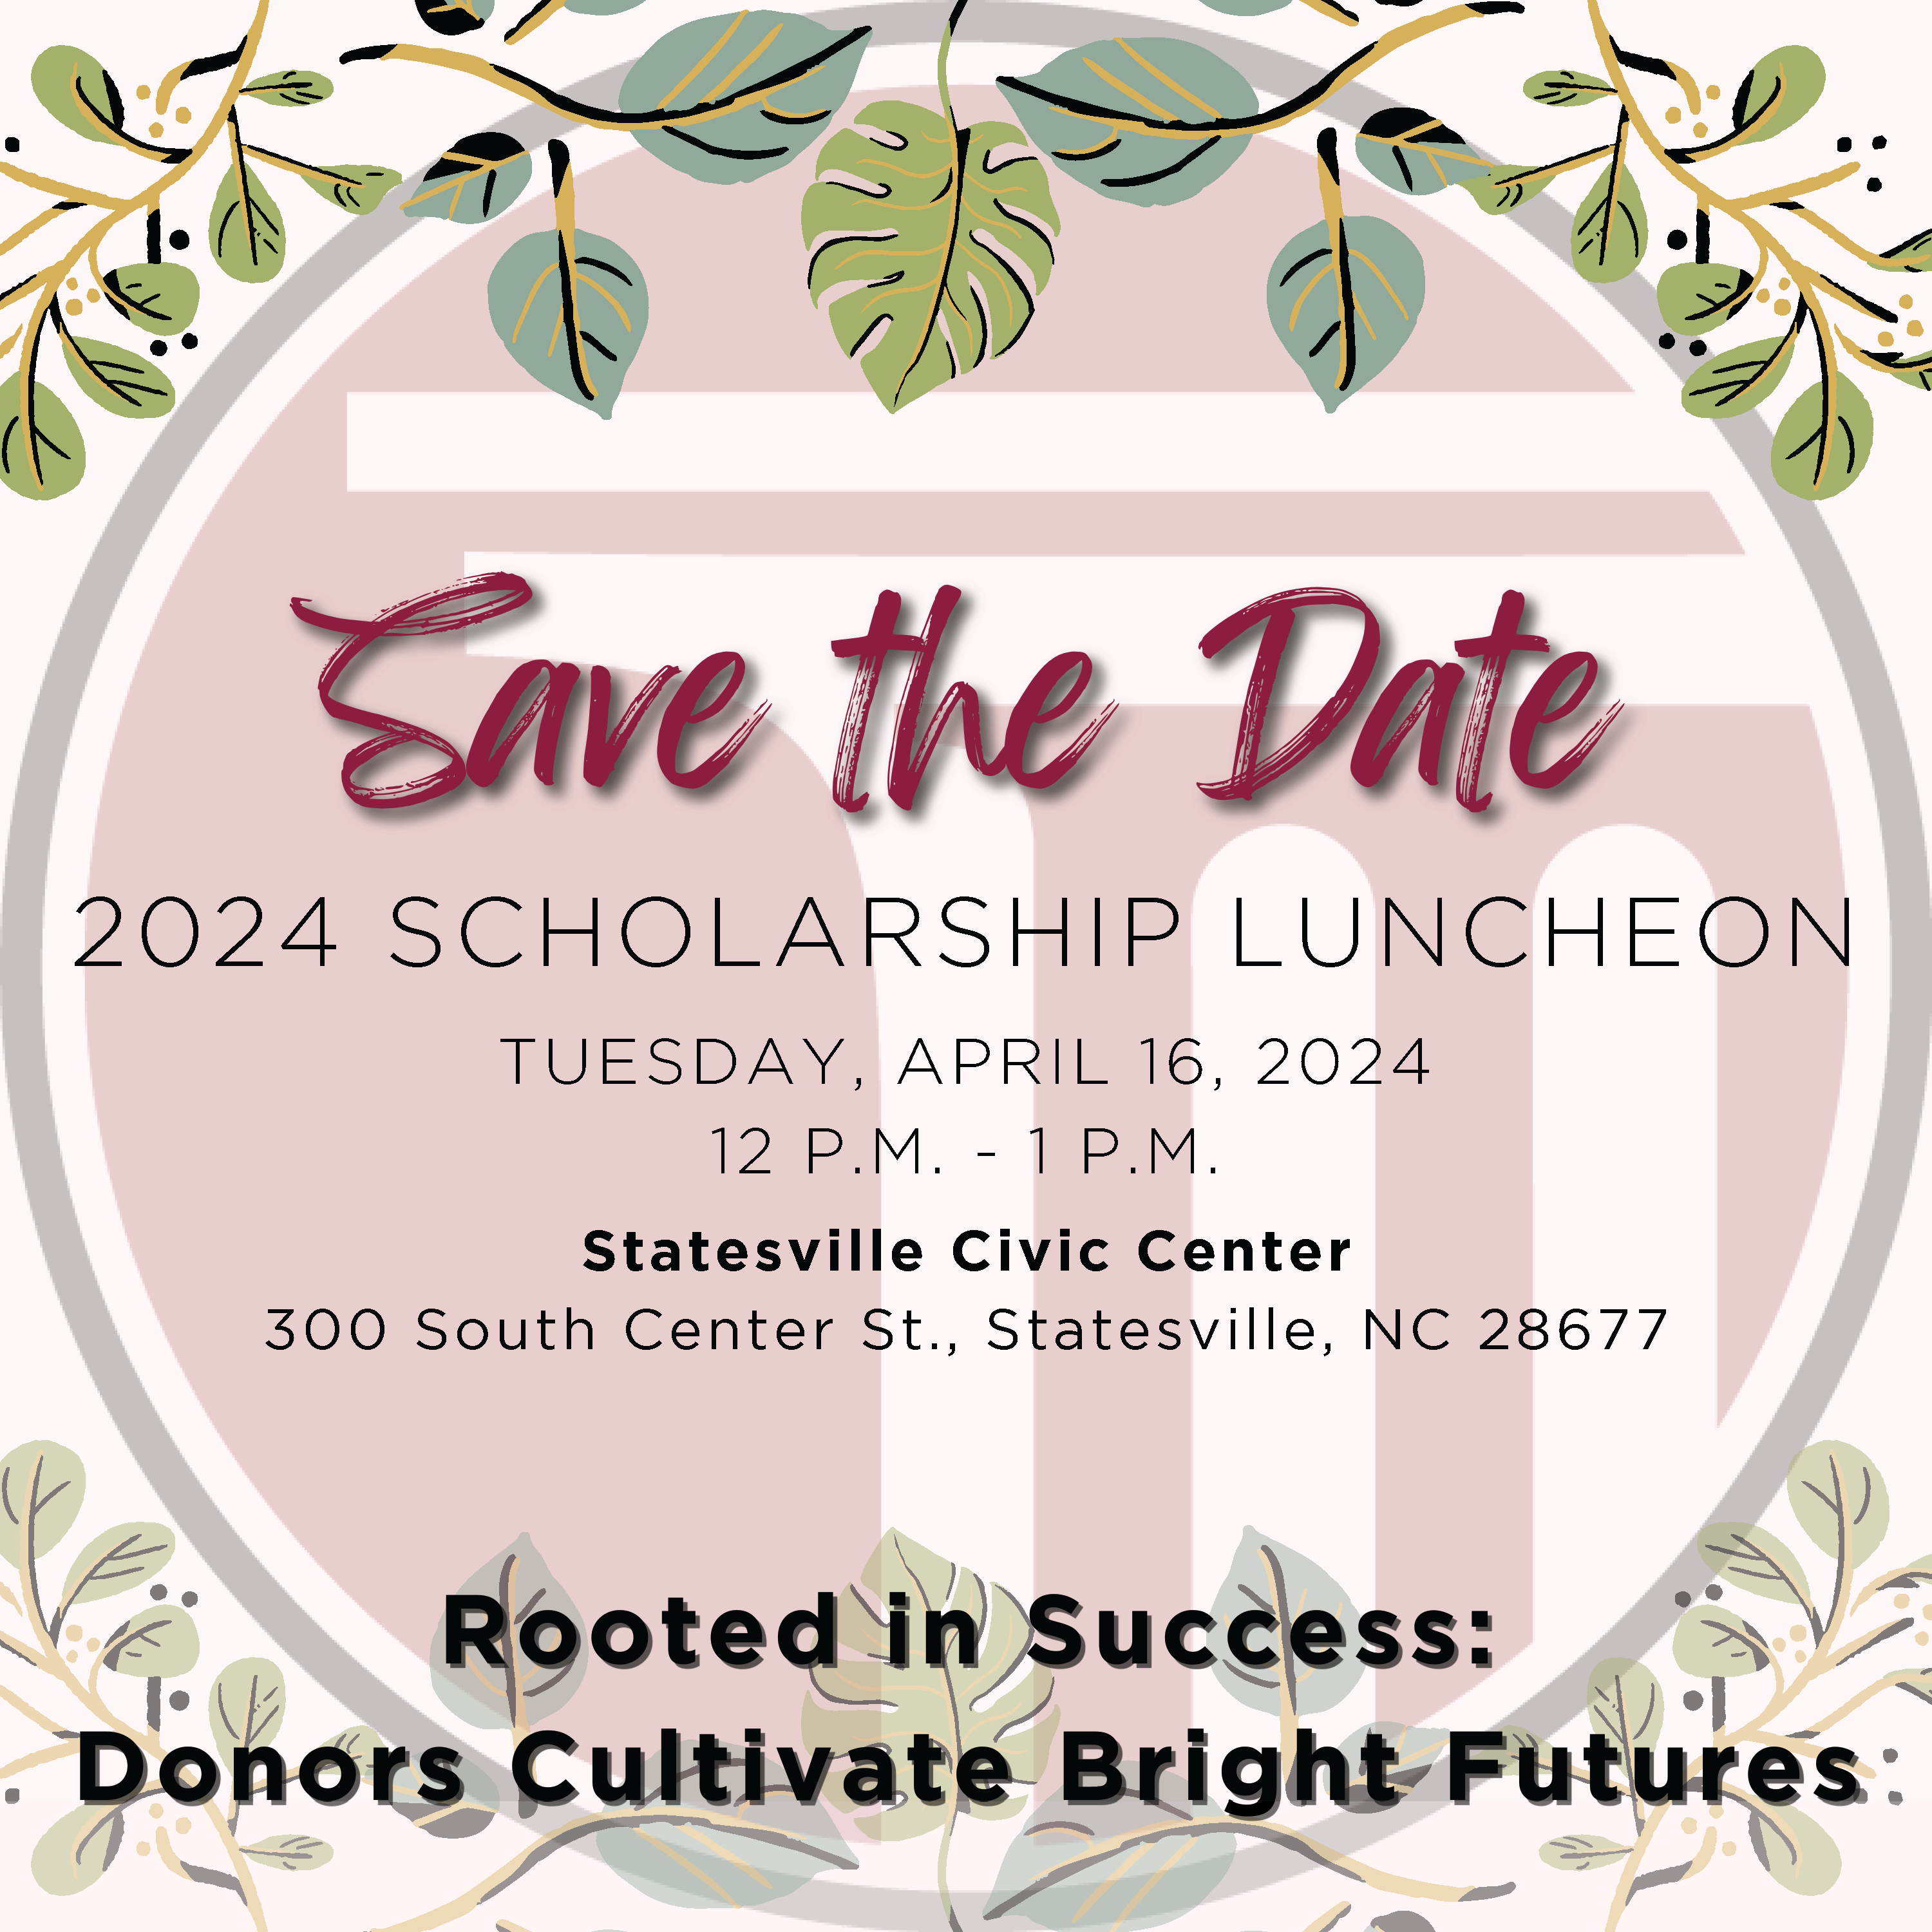 2024 Scholarship Luncheon invite